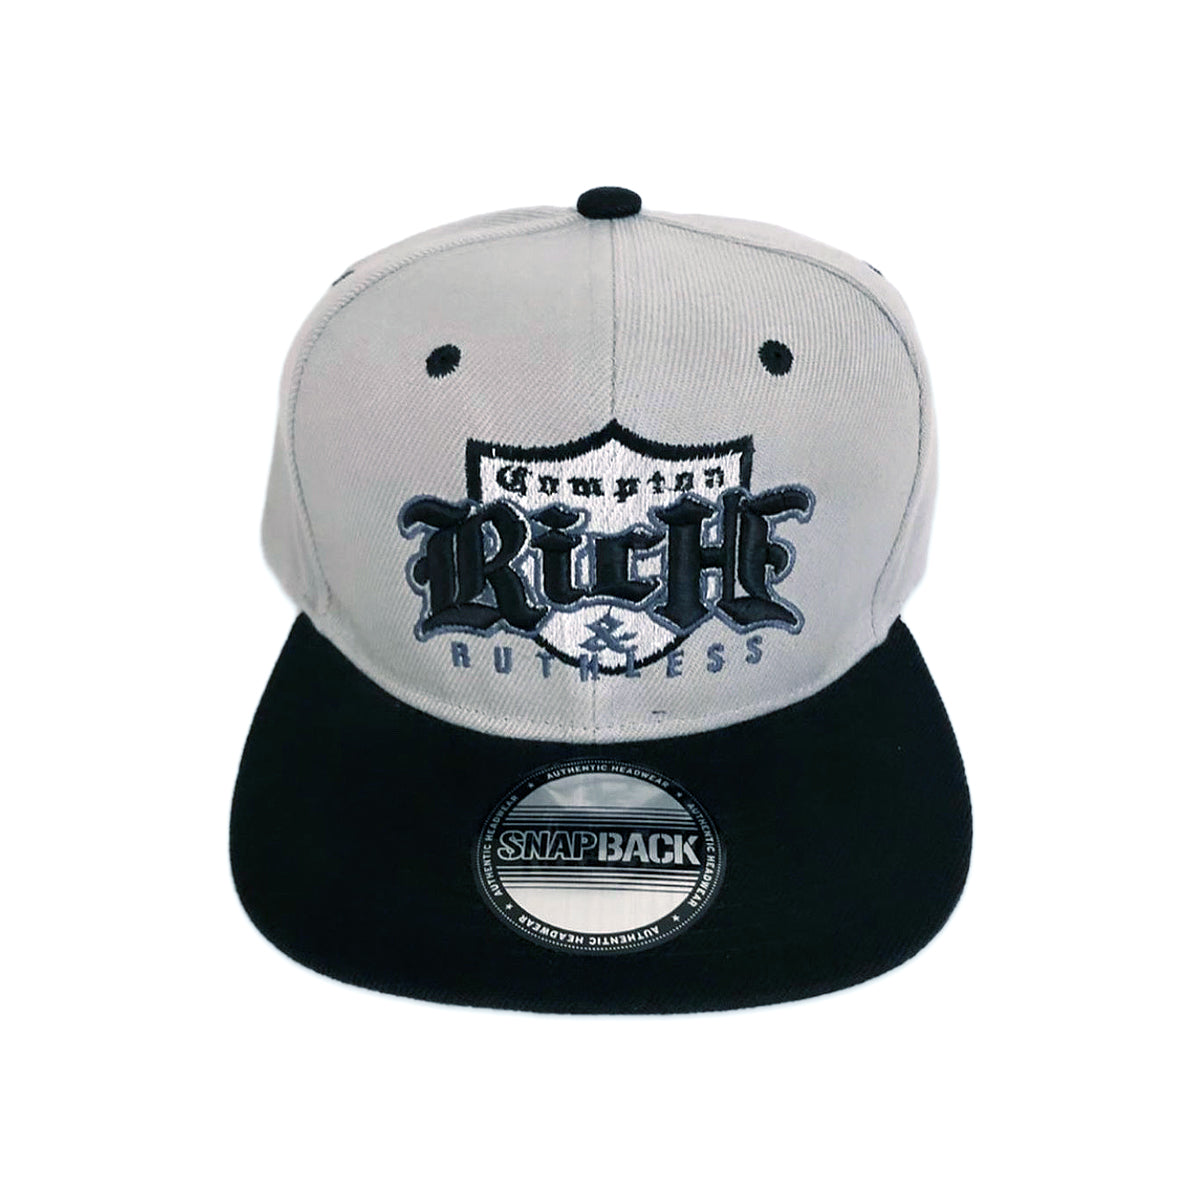 Compton Rich & Ruthless Retro Crest (Snapback Gray/Black)